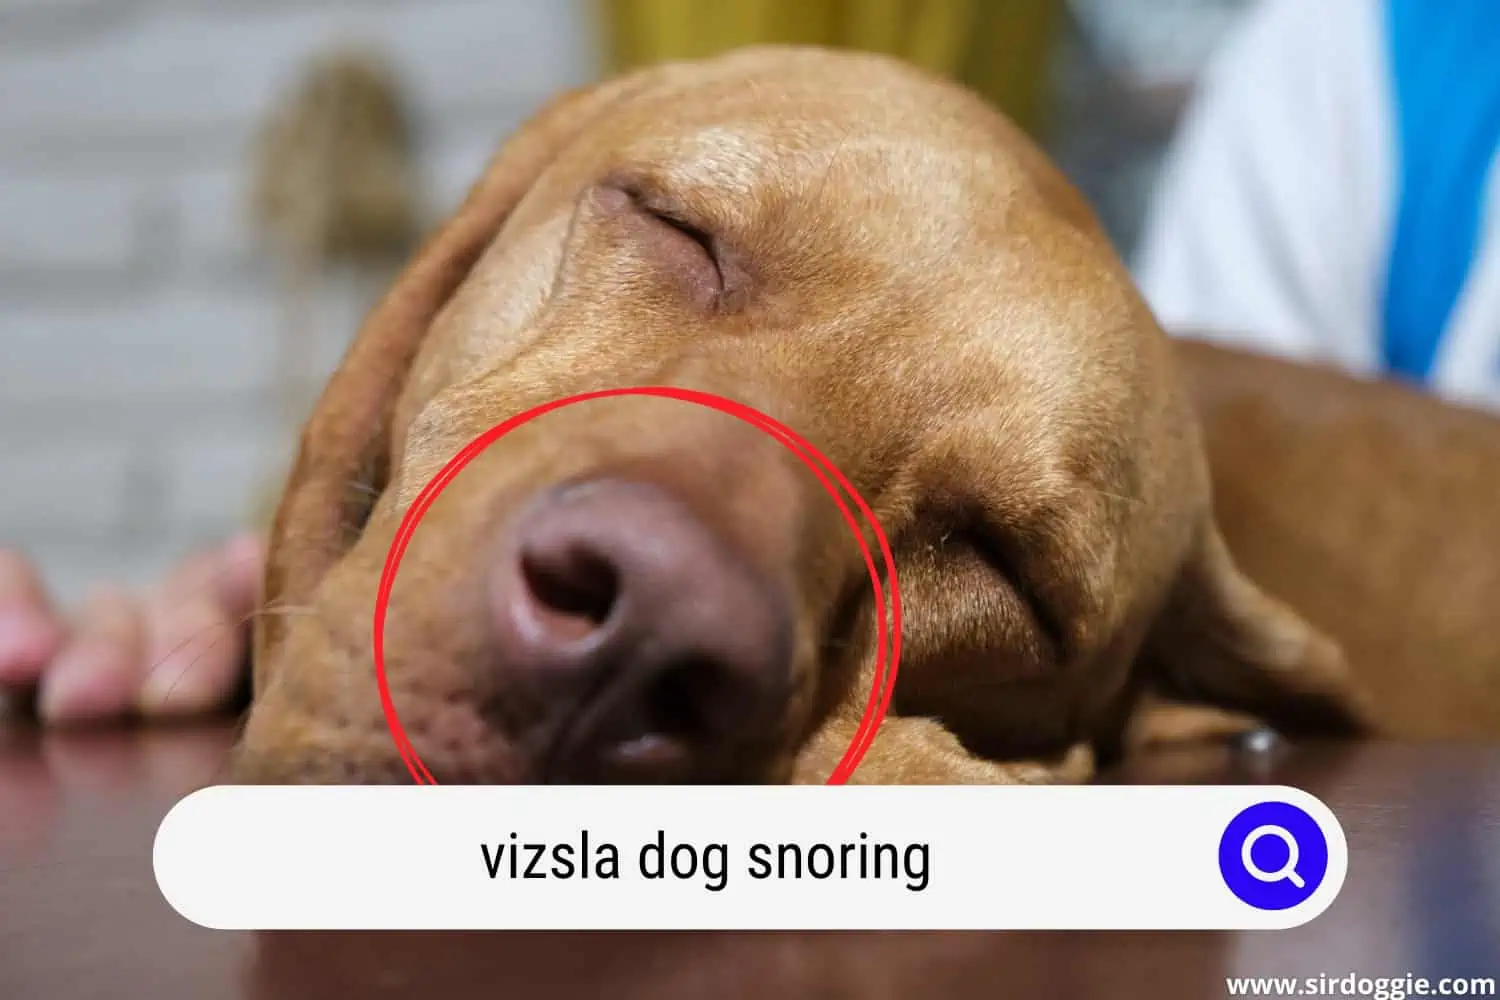 Vizsla dog snoring while on sleep